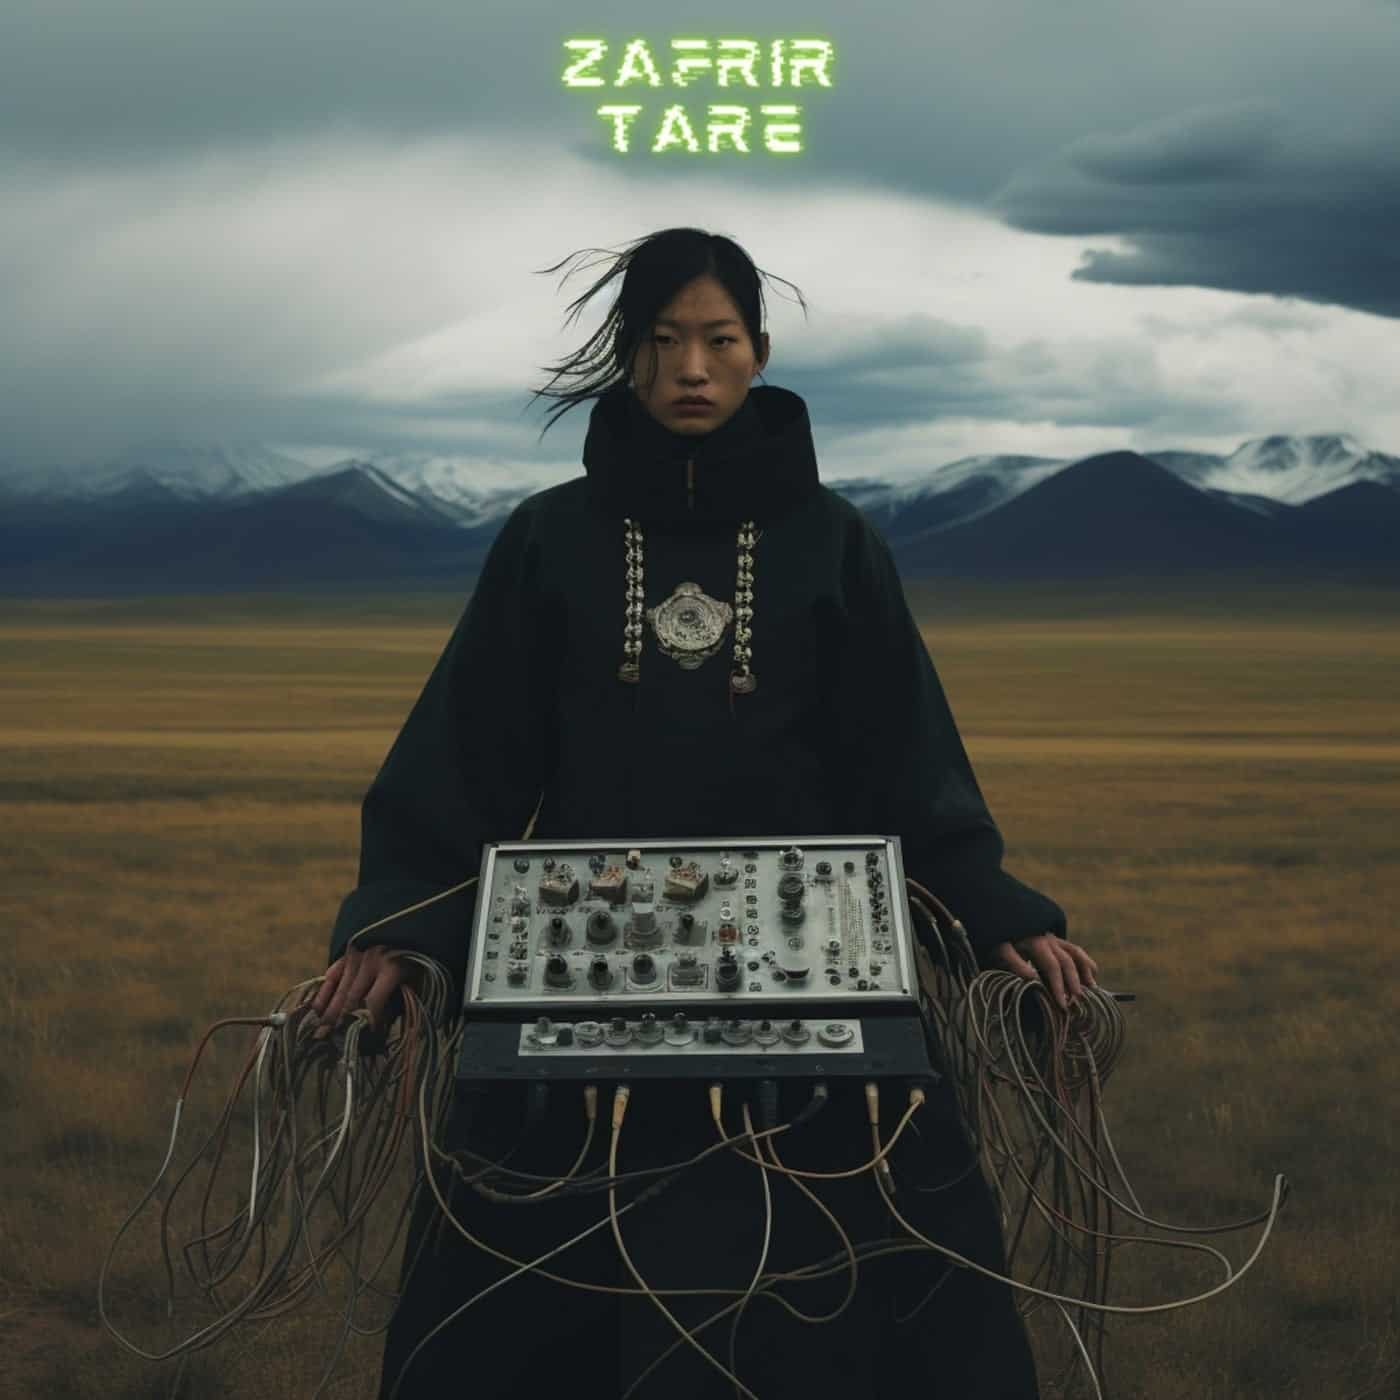 image cover: Zafrir - TARE on ZAF RECORDS